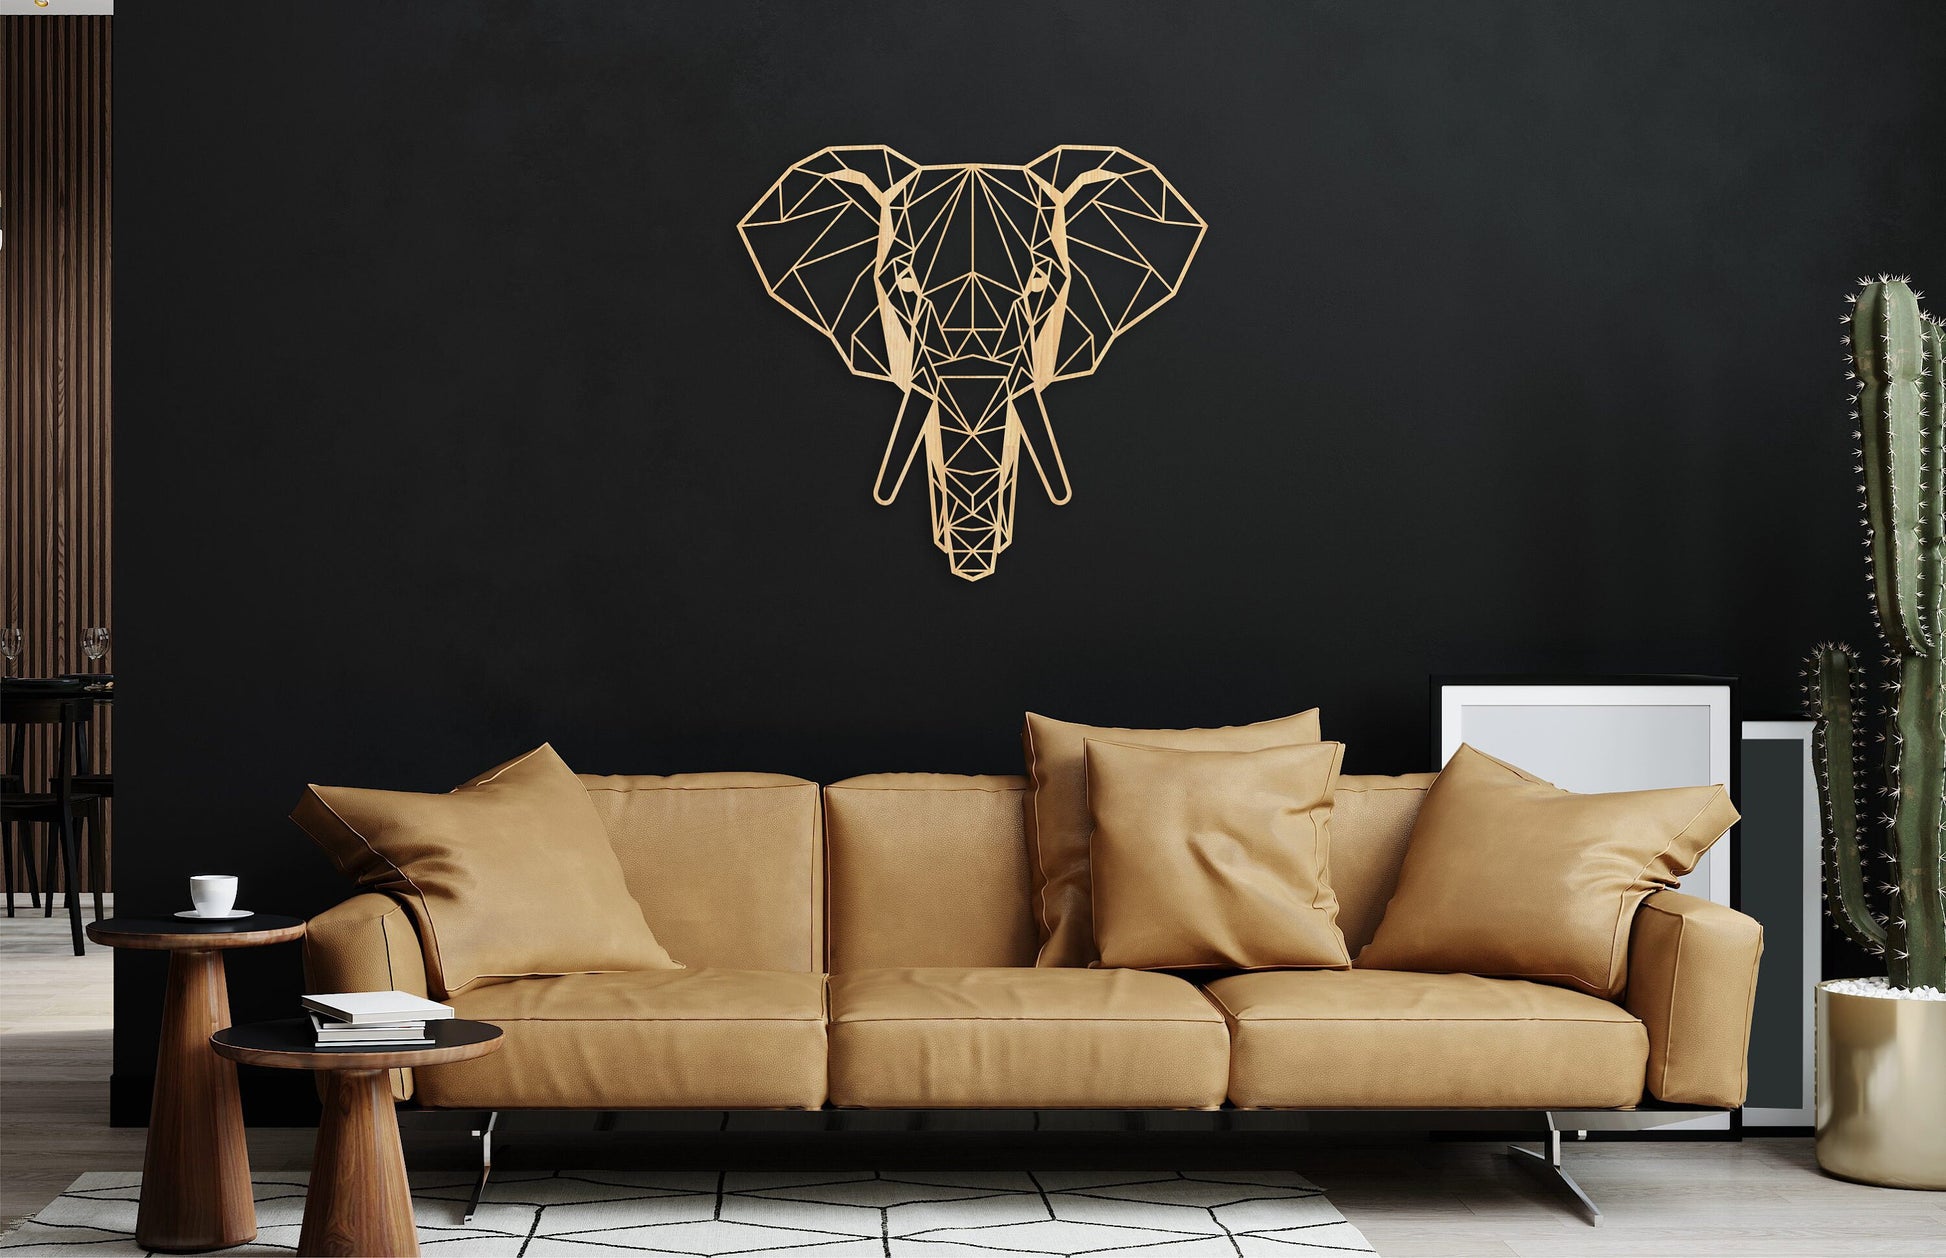 Elephant wood art, wooden elephant, elephant room decor, wood elephant, wooden animals, modern wooden wall art, wall decor over the bed